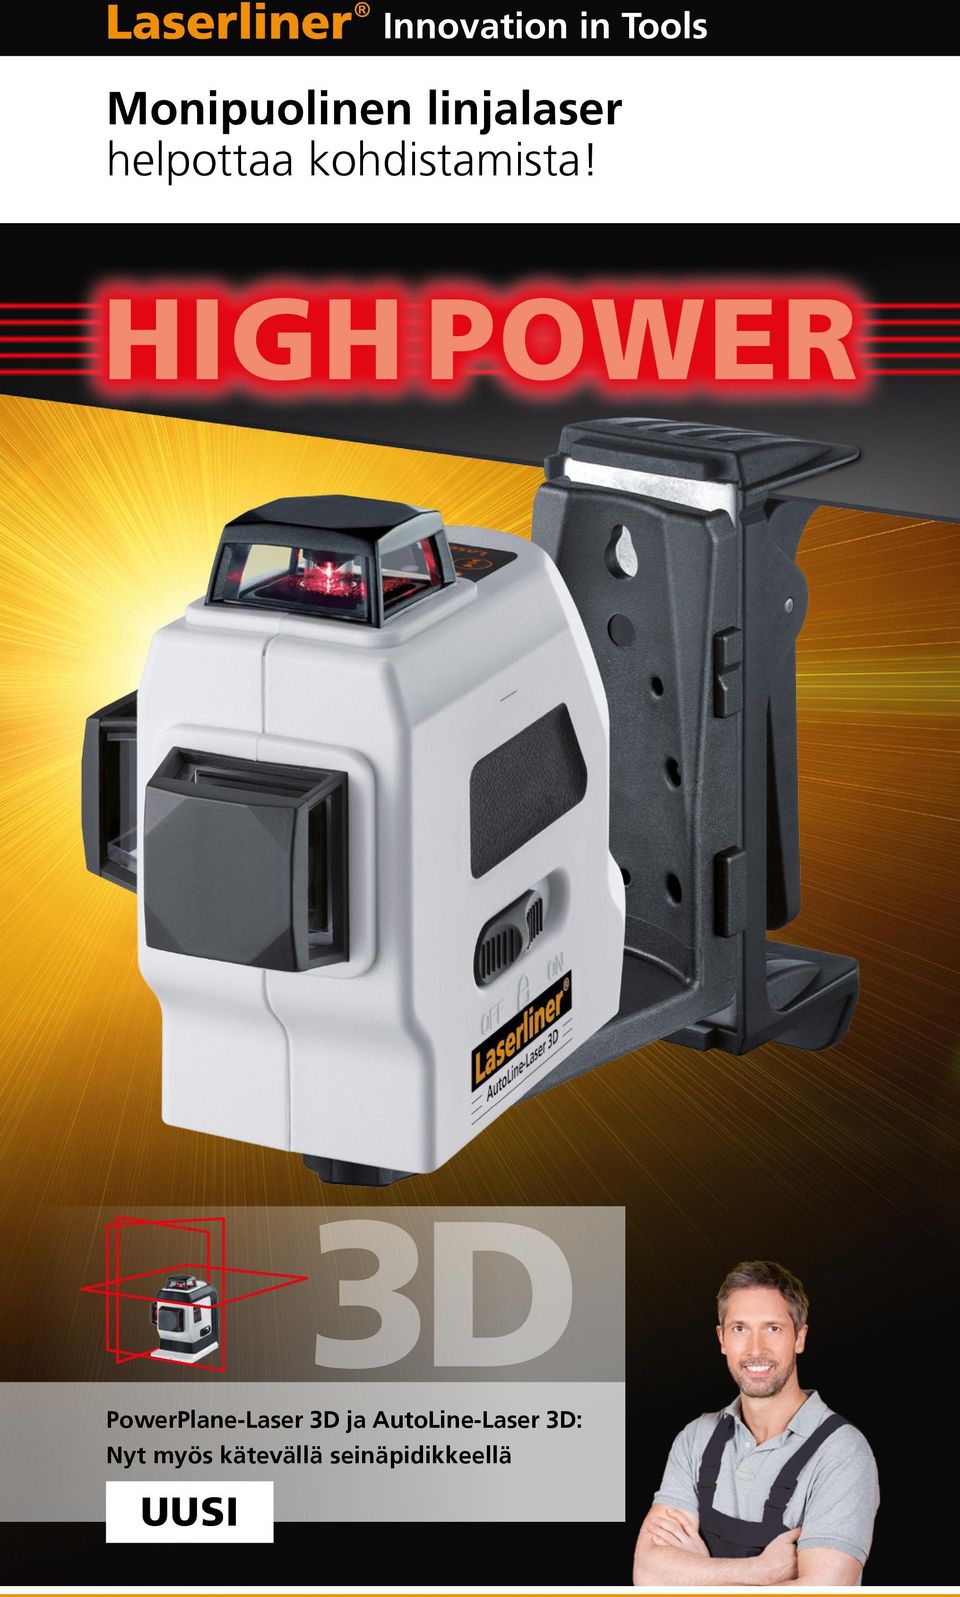 HIGH POWER 3D PowerPlane-Laser 3D ja